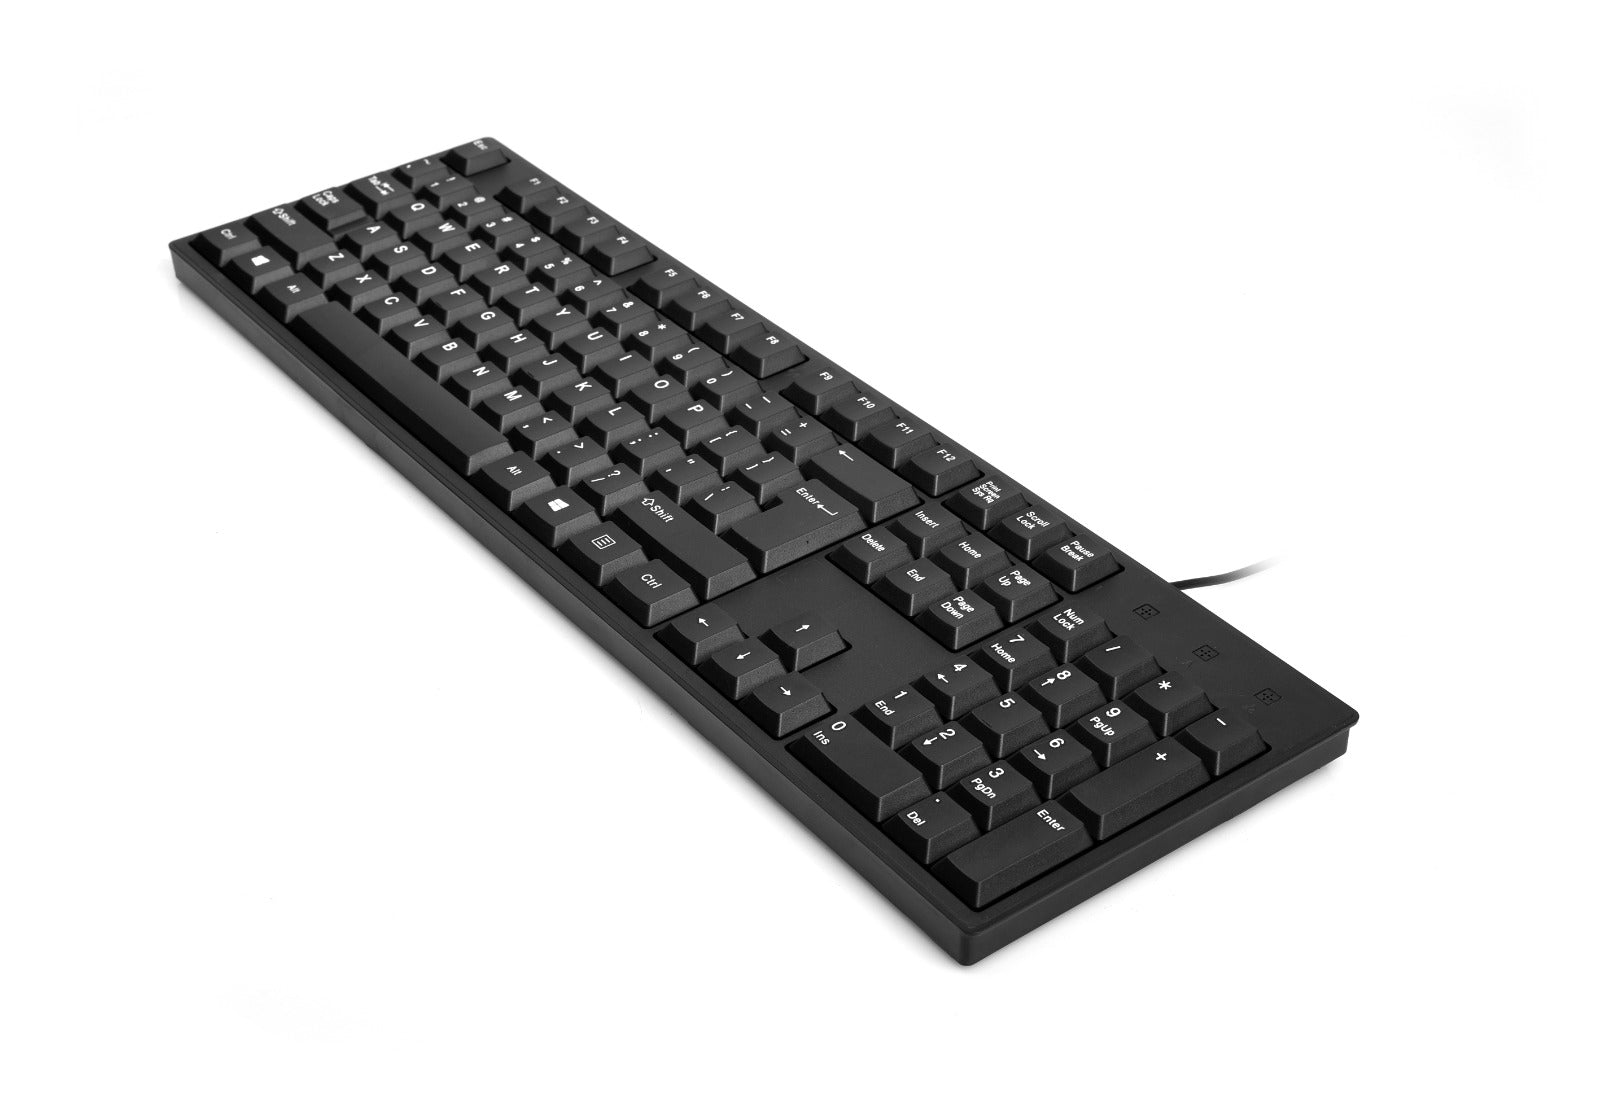 G-103 USB Office keyboard